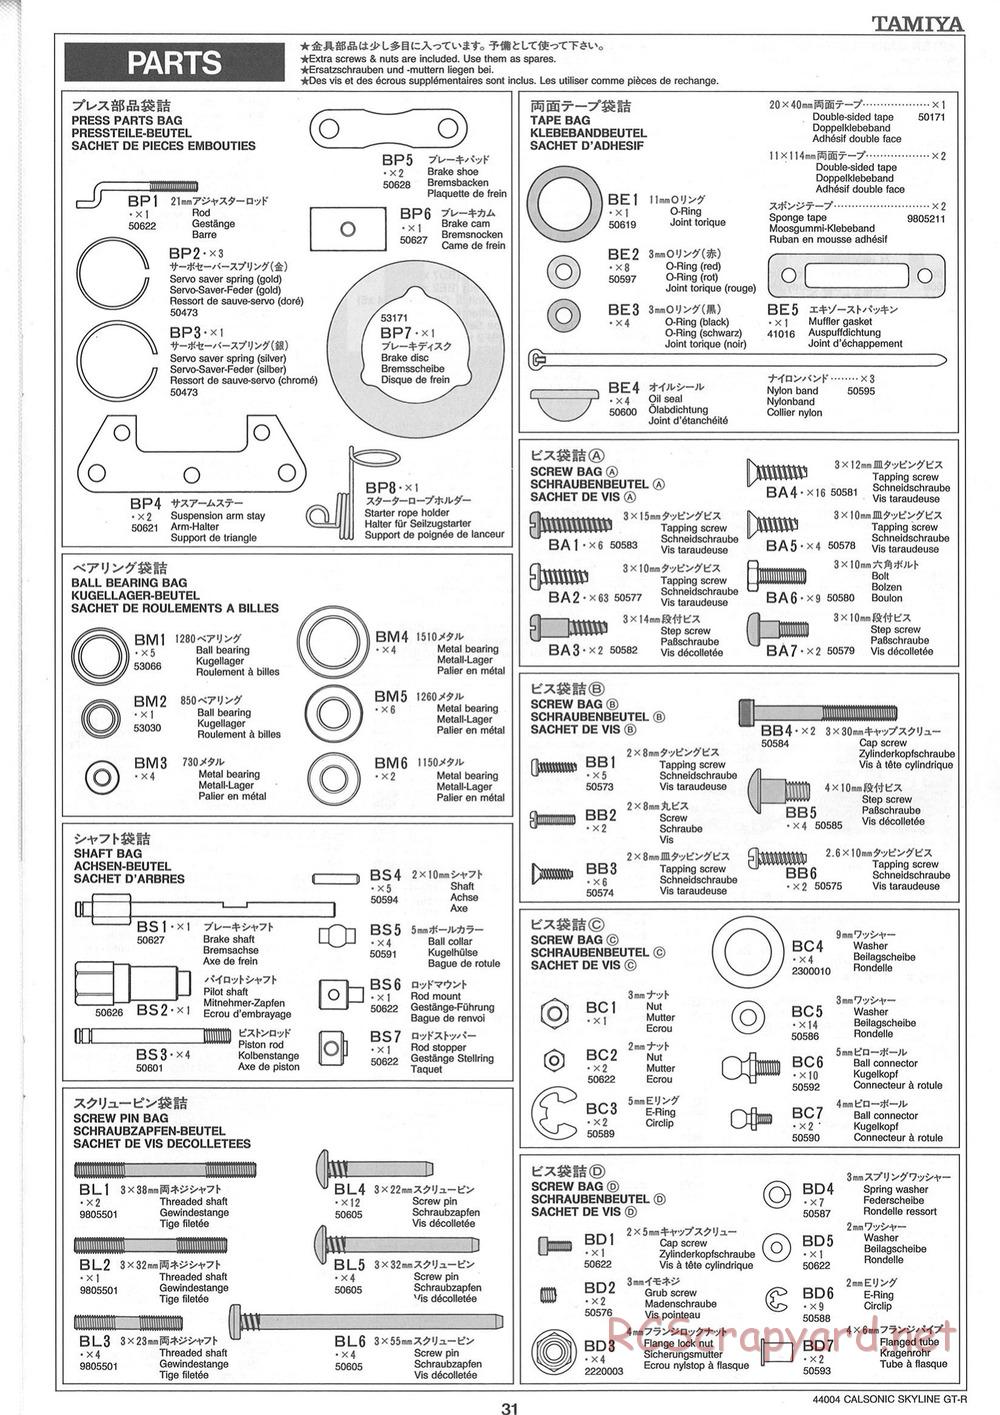 Tamiya - Calsonic GT-R - TGX Mk.1 Chassis - Manual - Page 31